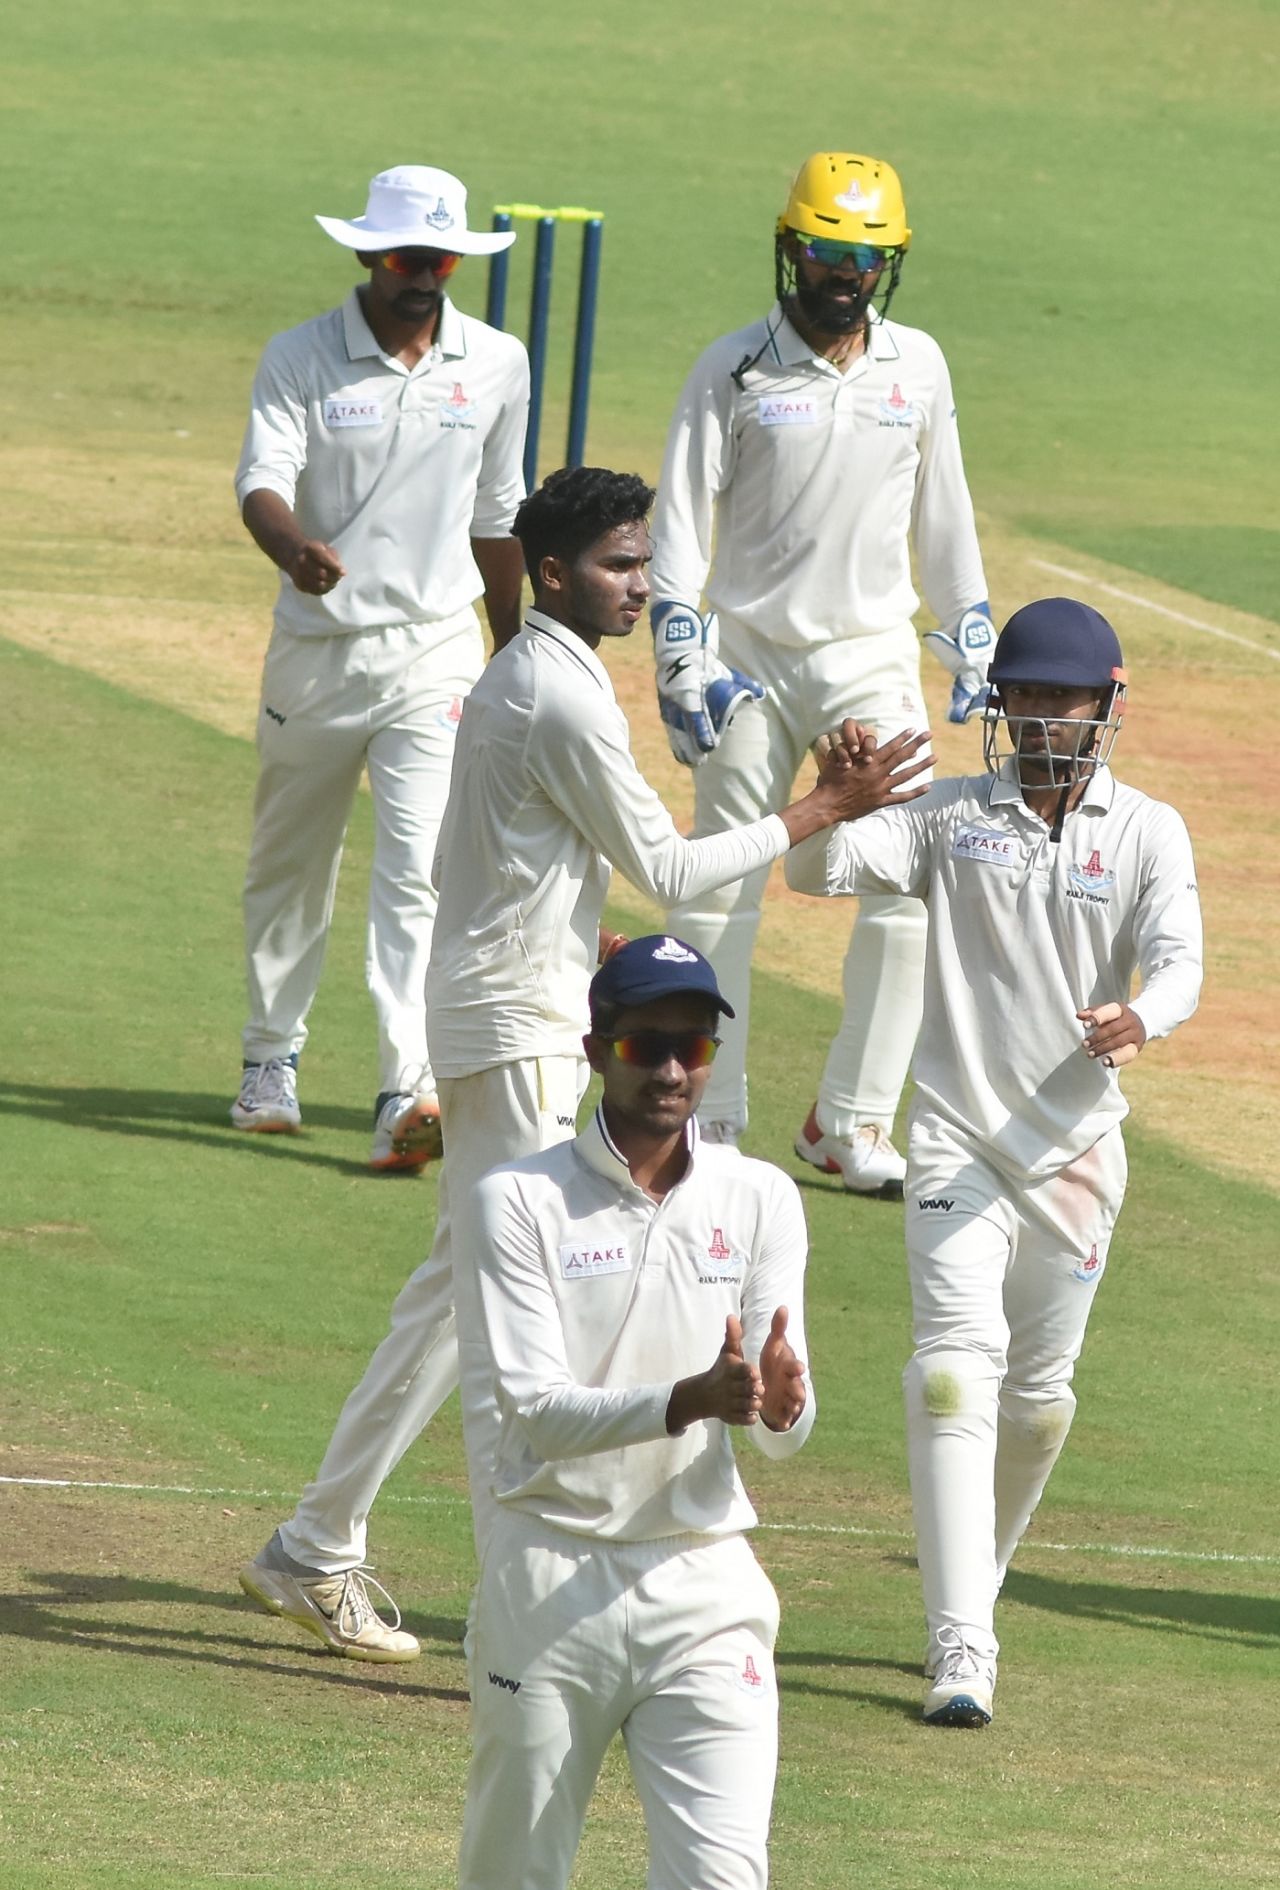 M Siddharth celebrates a wicket, Tamil Nadu v Railways, Ranji Trophy 2019-20, Chennai, January 20, 2020